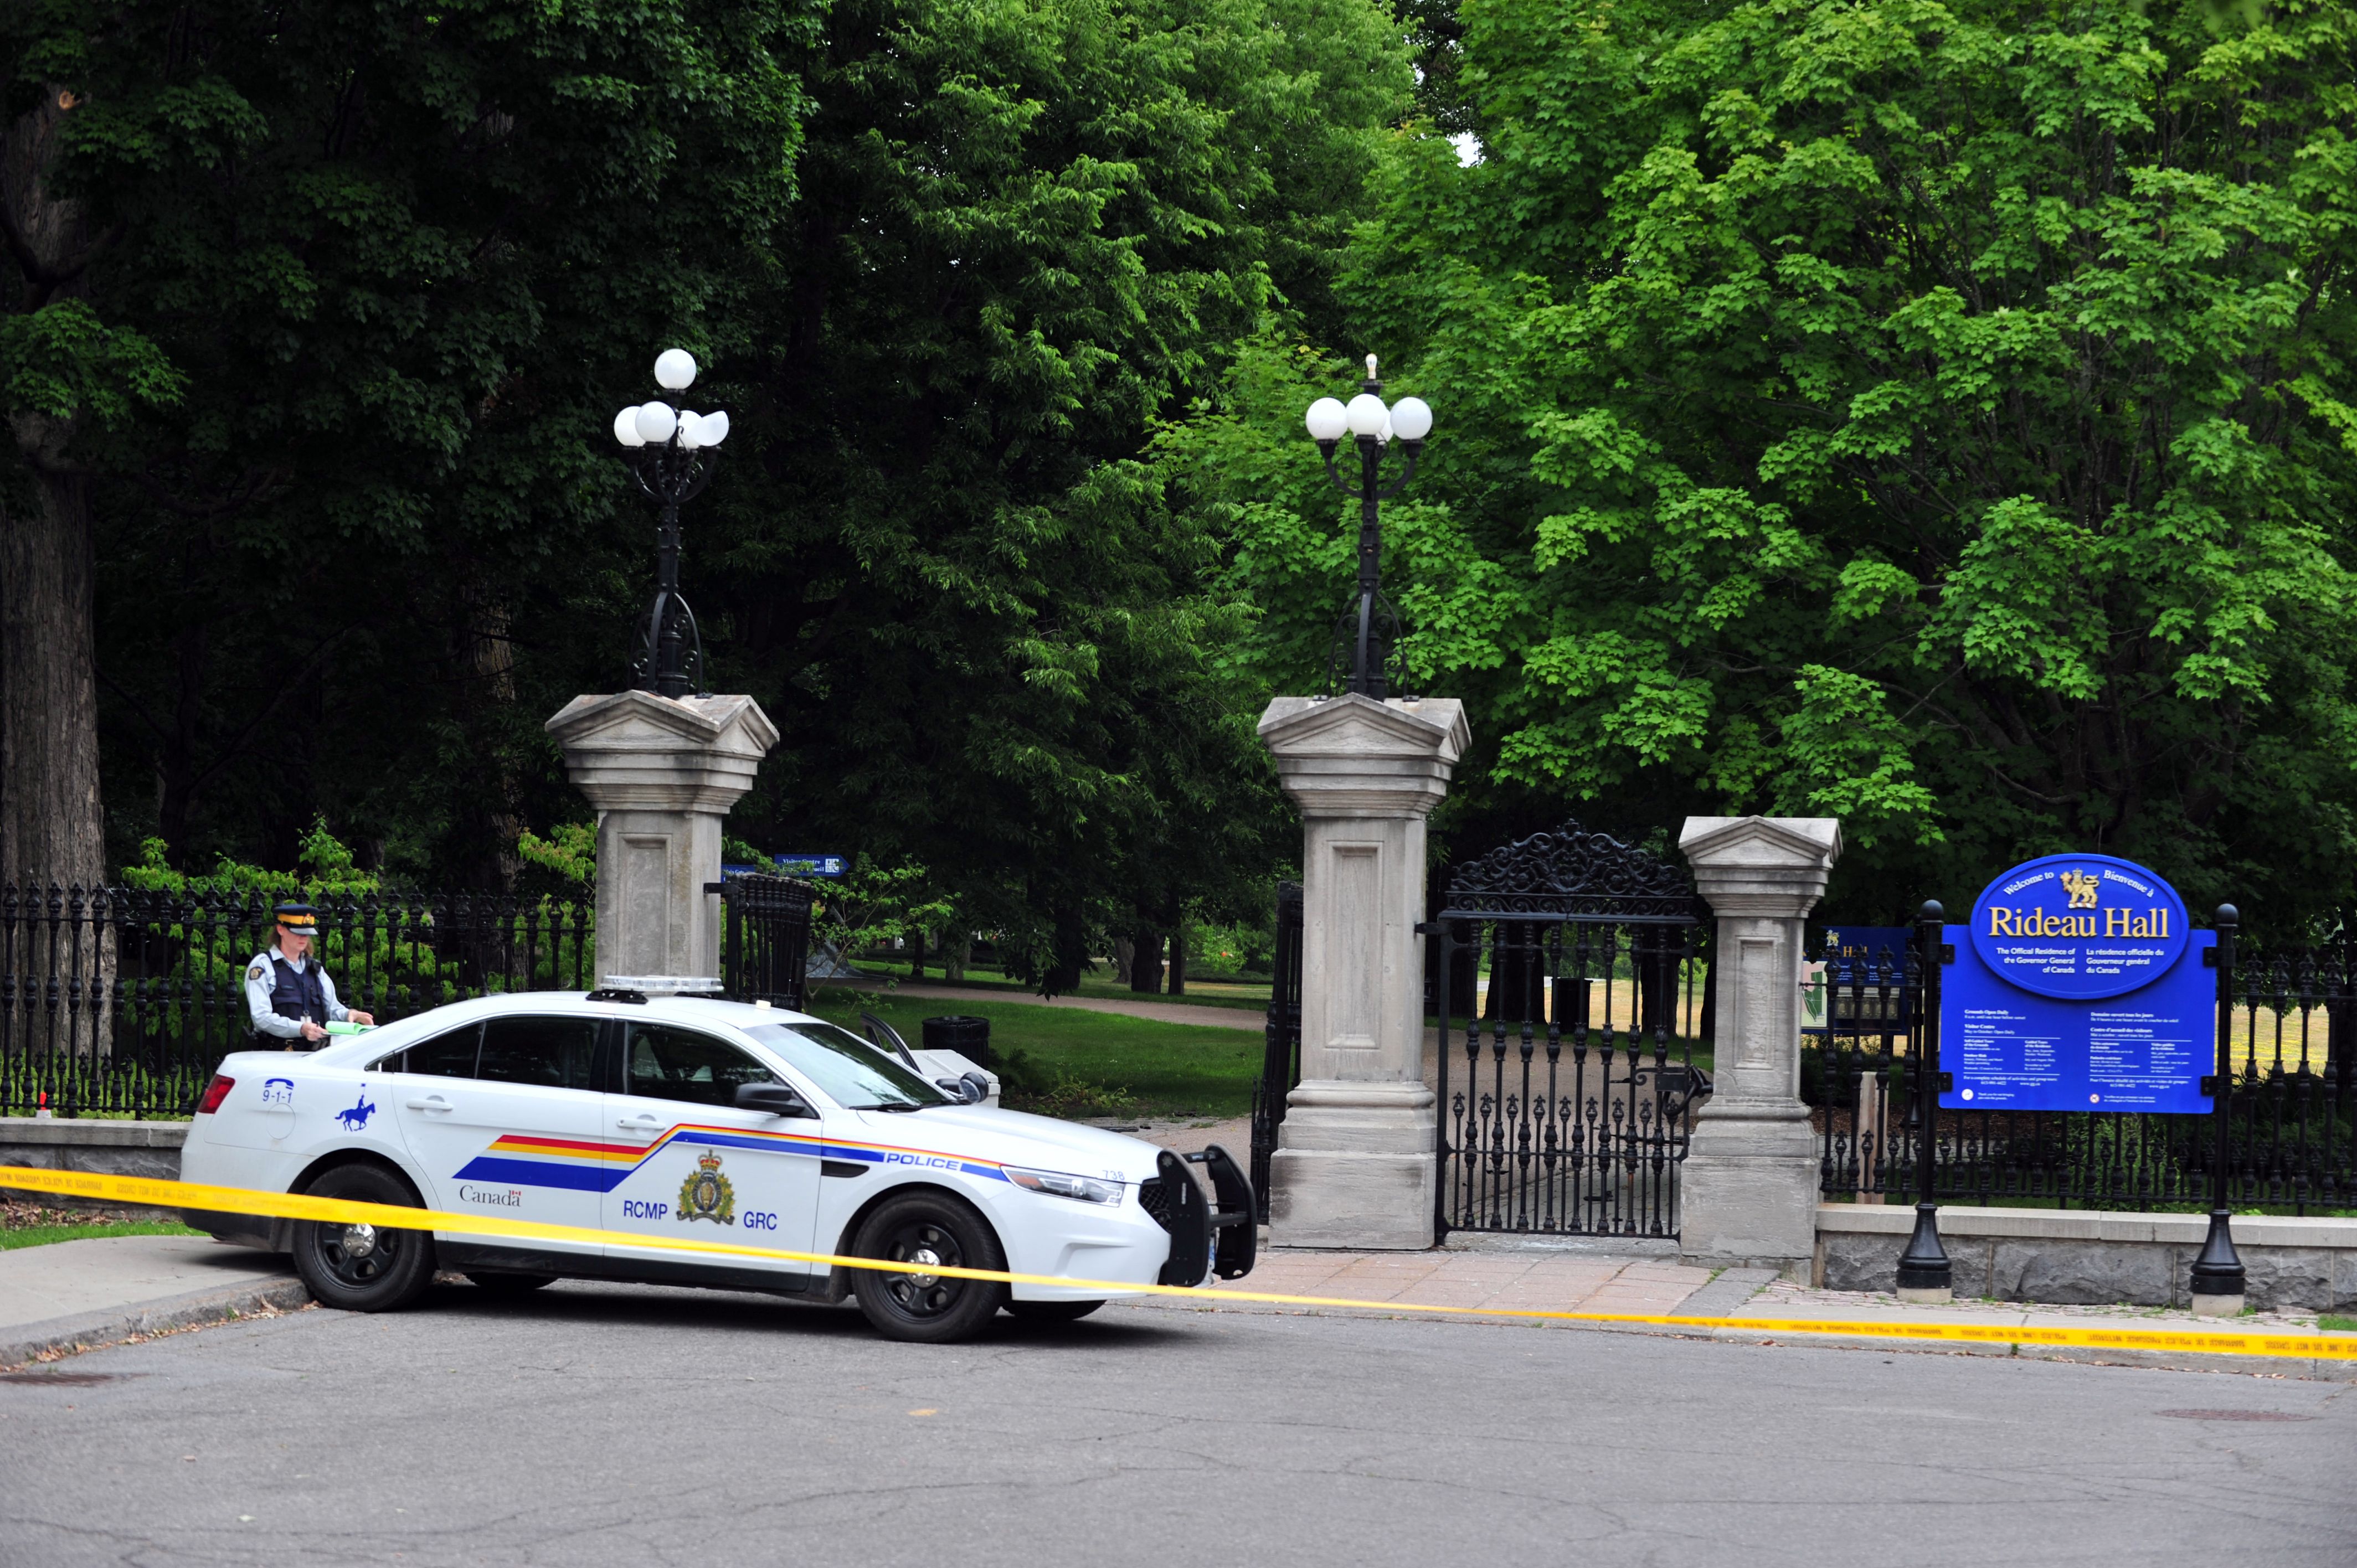 Representational image: A police car in Ontario, Canada